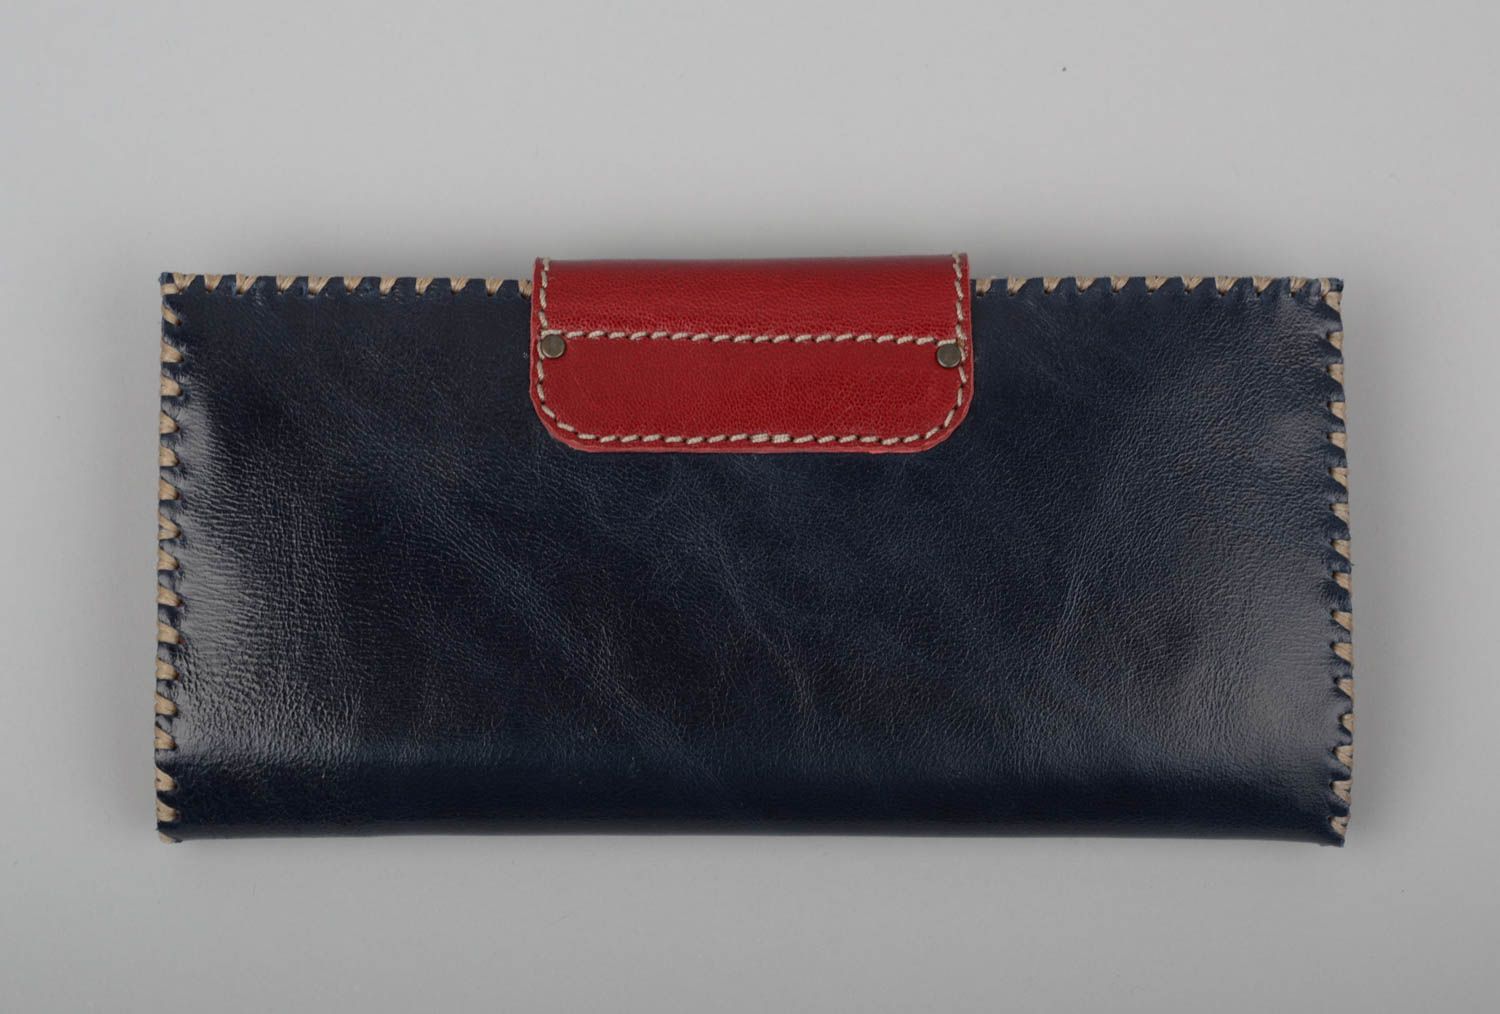 Black leather wallet stylish designer accessories beautiful unusual purse photo 3